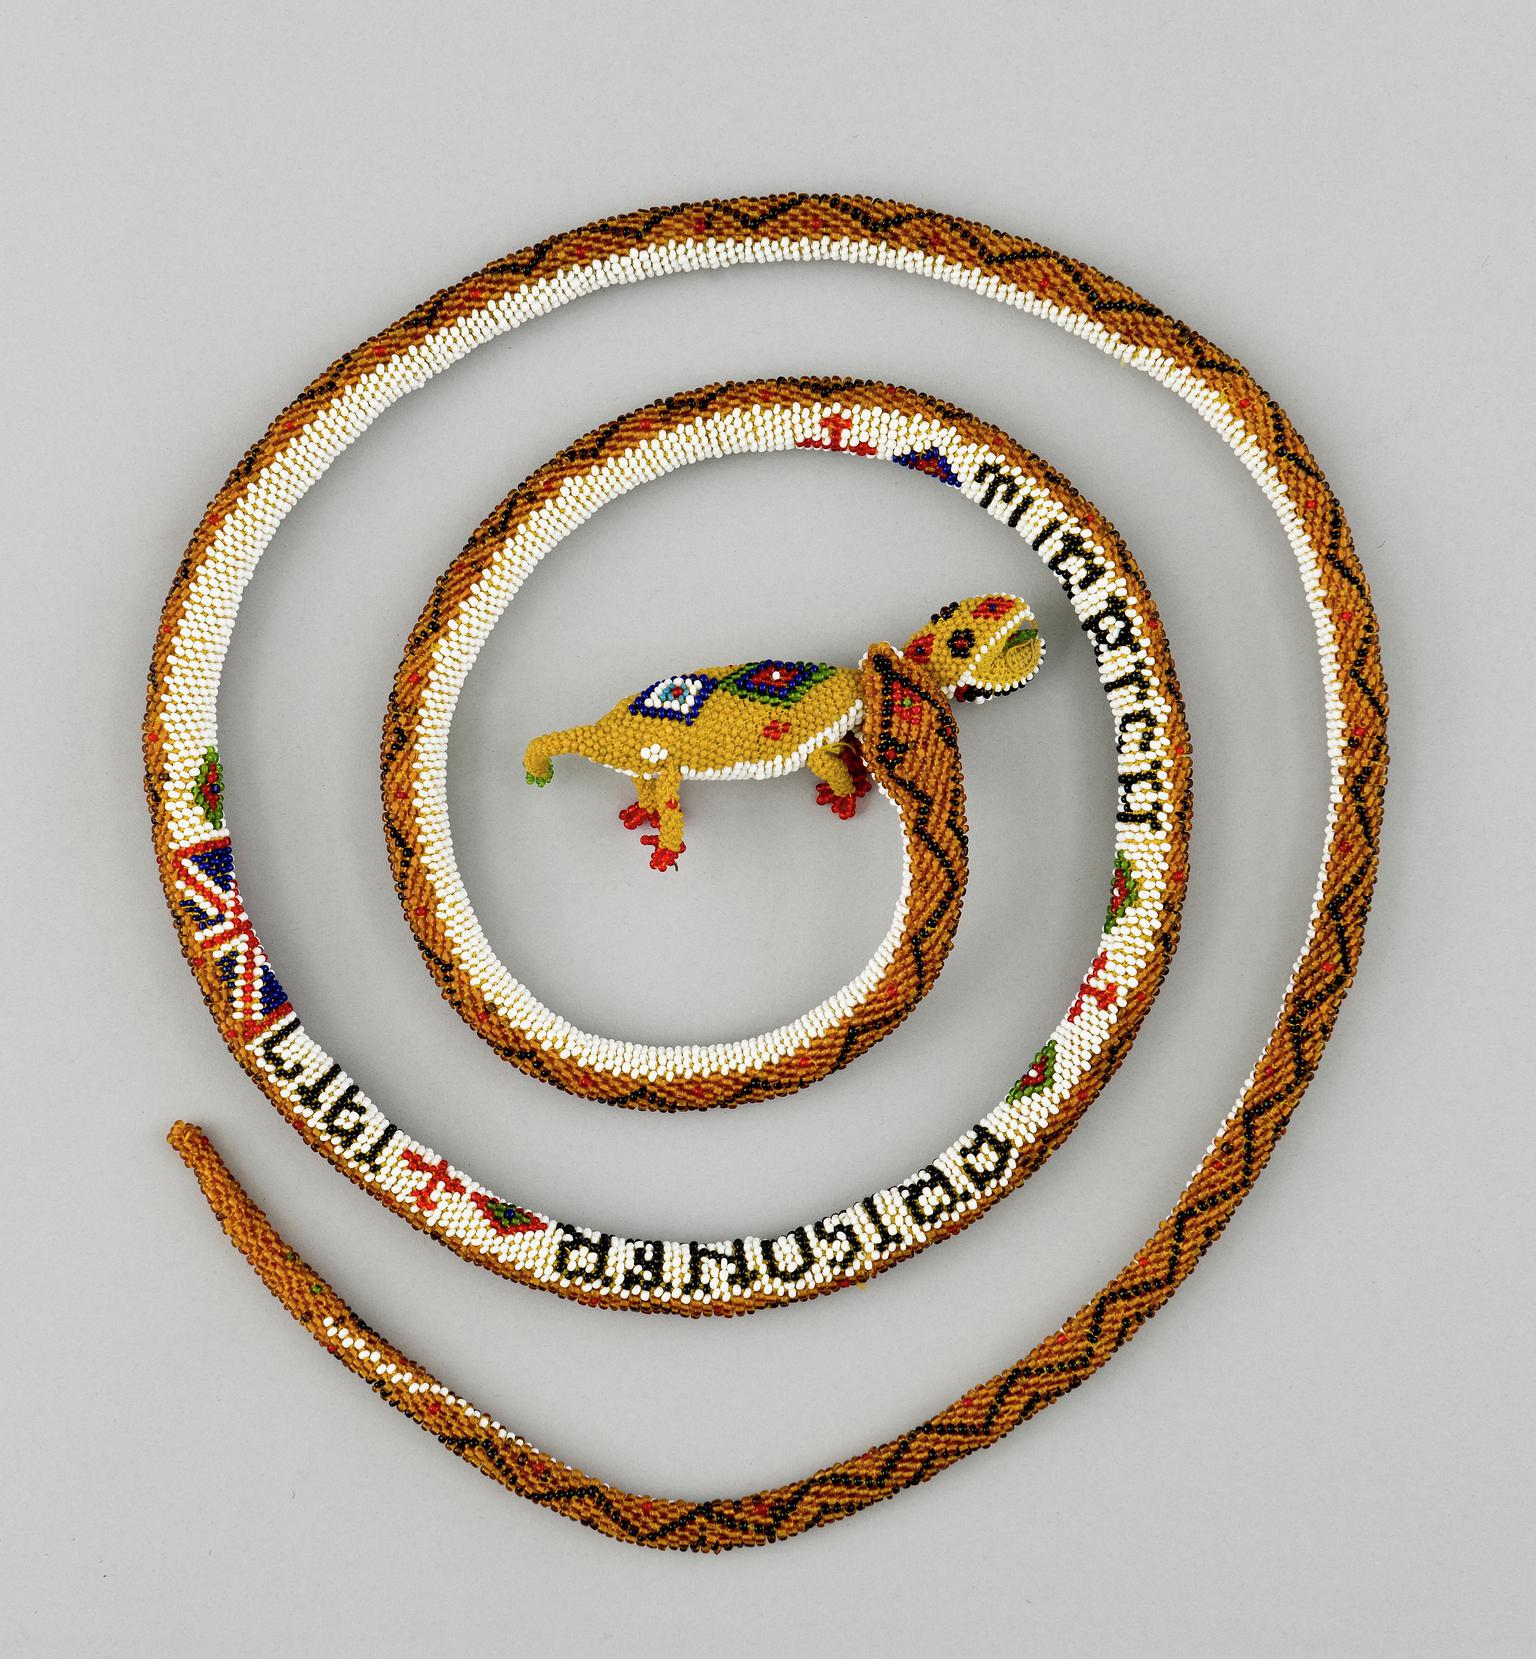 Beadwork snake